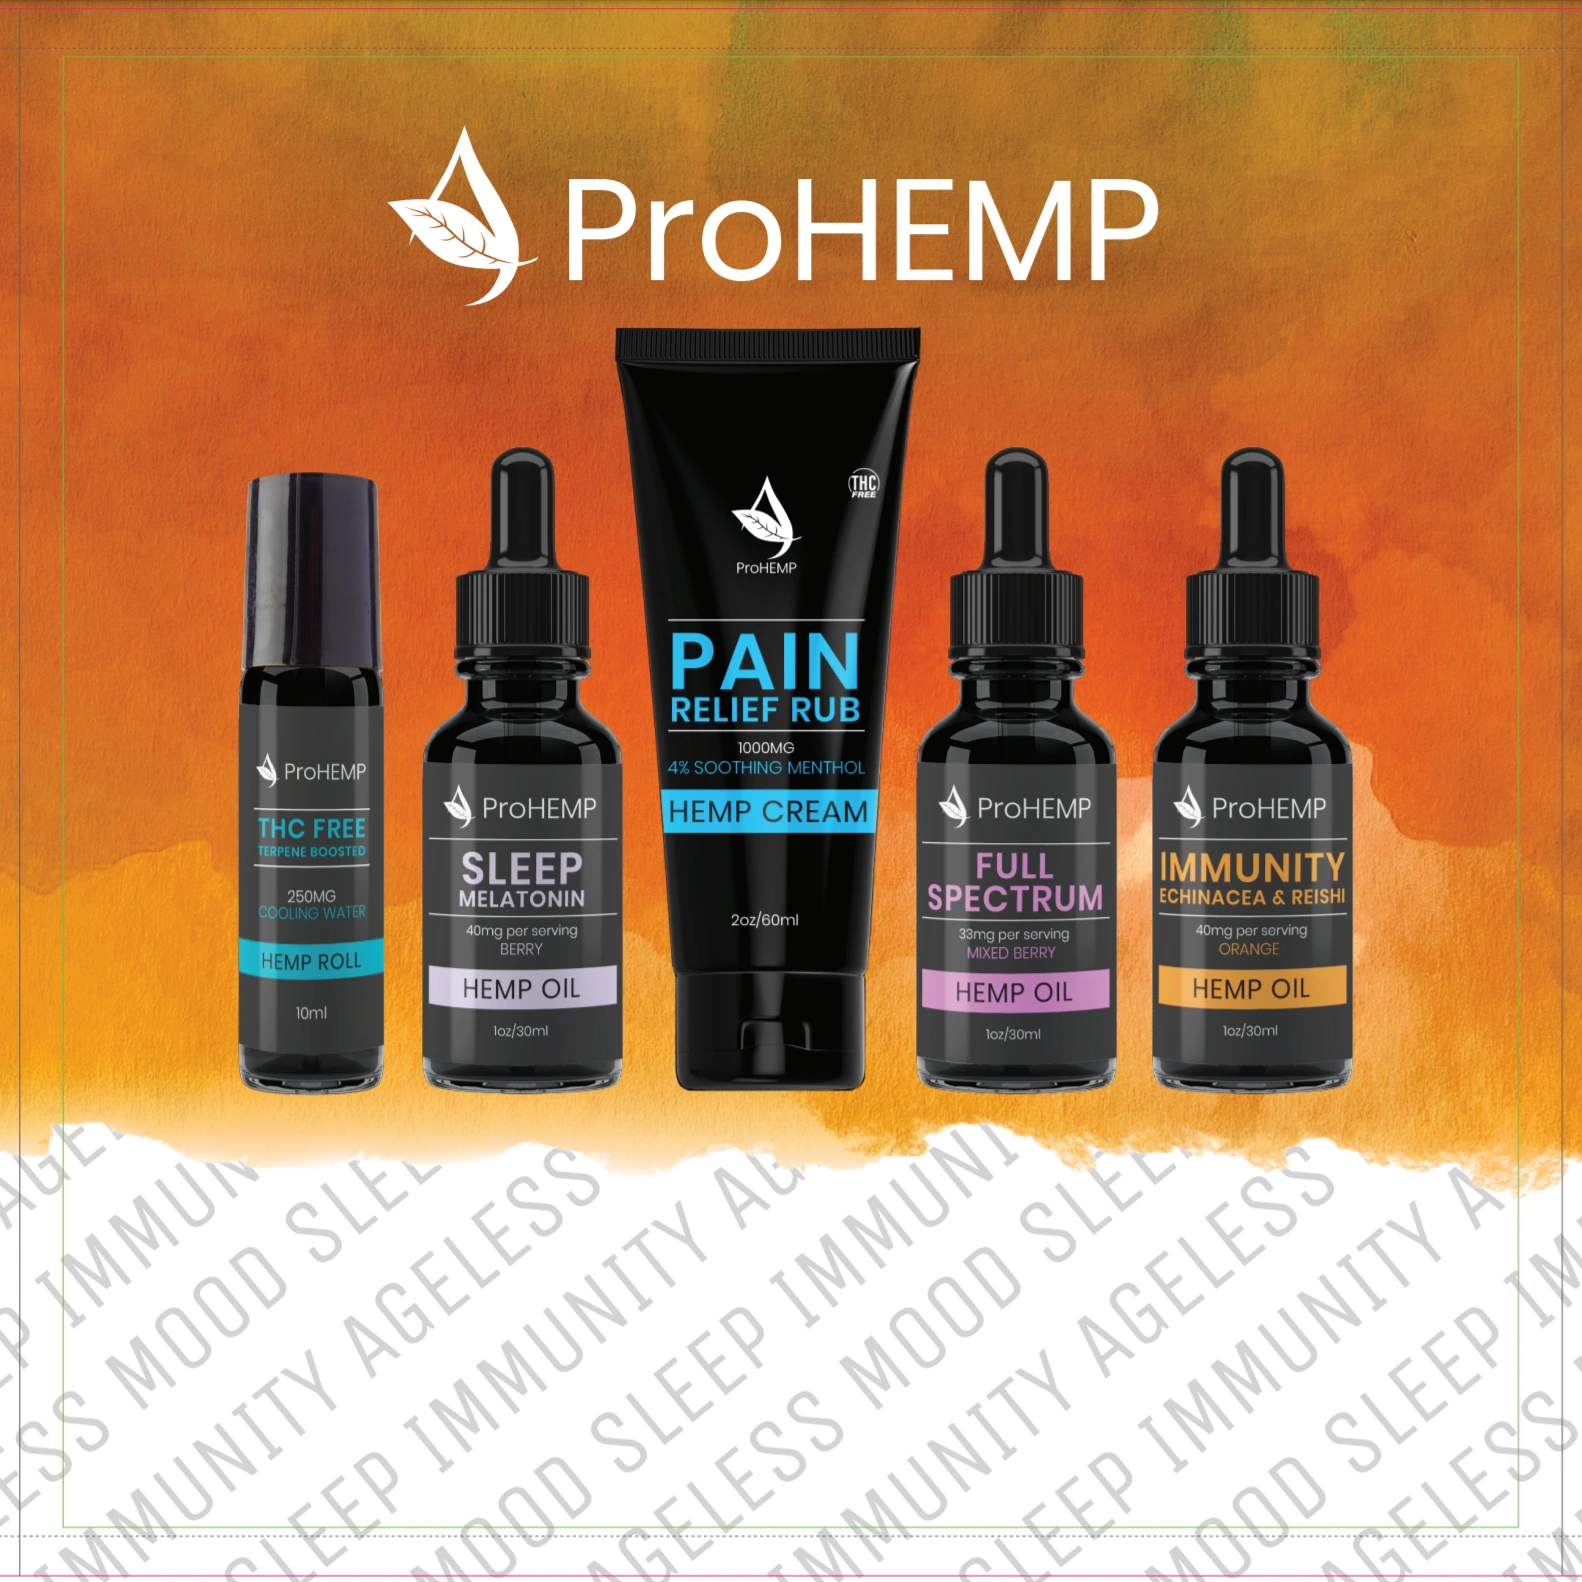 ProHEMP products | Cooling topical, Sleep Melatonin, Pain Relief Rub, Full Spectrum, Immunity